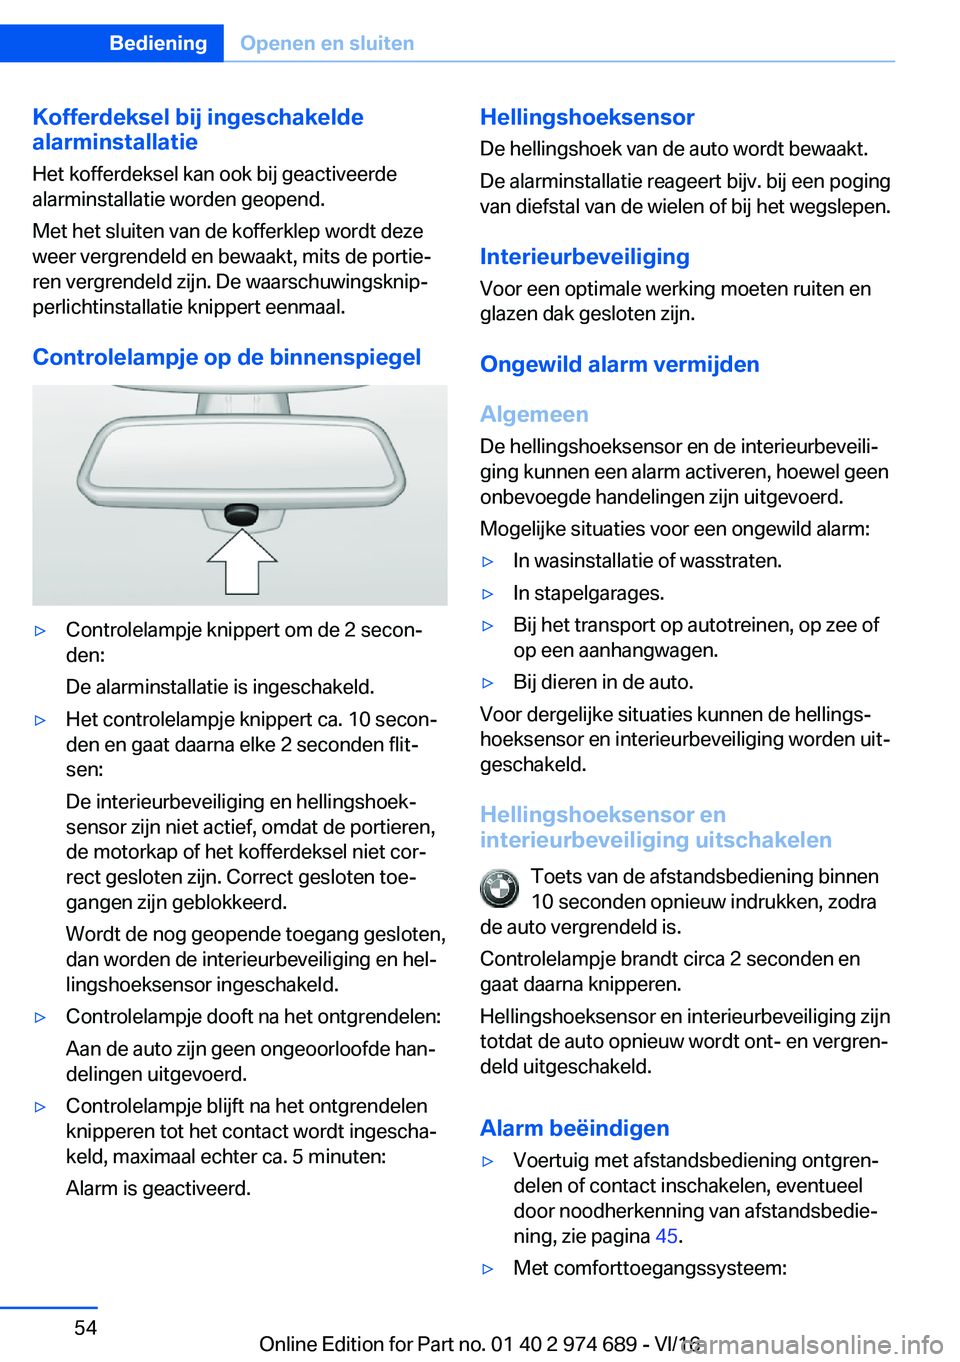 BMW M2 2017  Instructieboekjes (in Dutch) �K�o�f�f�e�r�d�e�k�s�e�l��b�i�j��i�n�g�e�s�c�h�a�k�e�l�d�e
�a�l�a�r�m�i�n�s�t�a�l�l�a�t�i�e
�H�e�t� �k�o�f�f�e�r�d�e�k�s�e�l� �k�a�n� �o�o�k� �b�i�j� �g�e�a�c�t�i�v�e�e�r�d�e
�a�l�a�r�m�i�n�s�t�a�l�